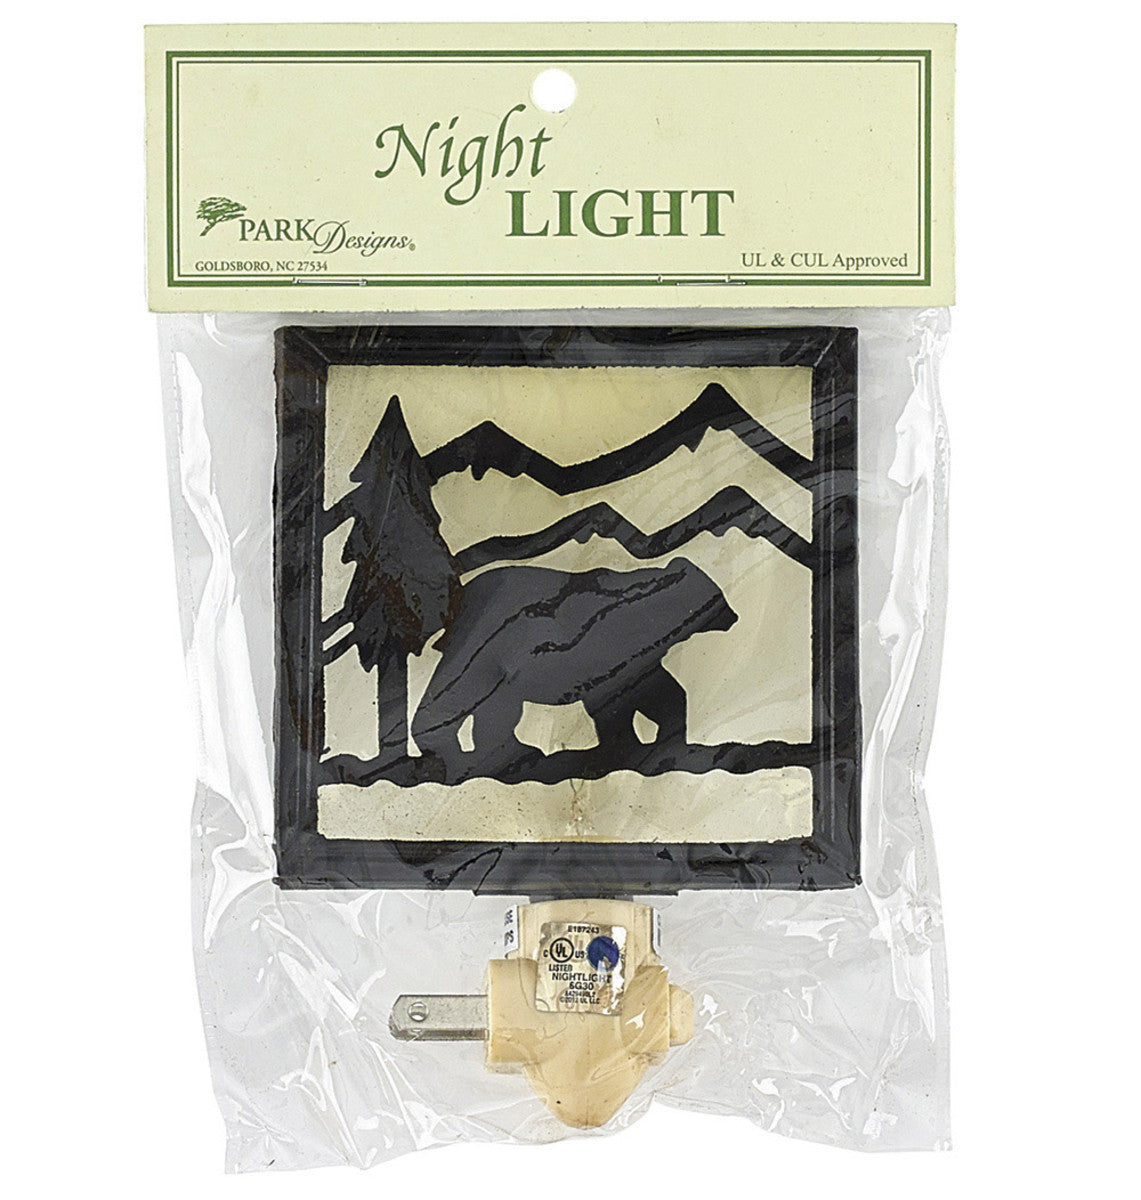 Lodge Night Light - Park Designs